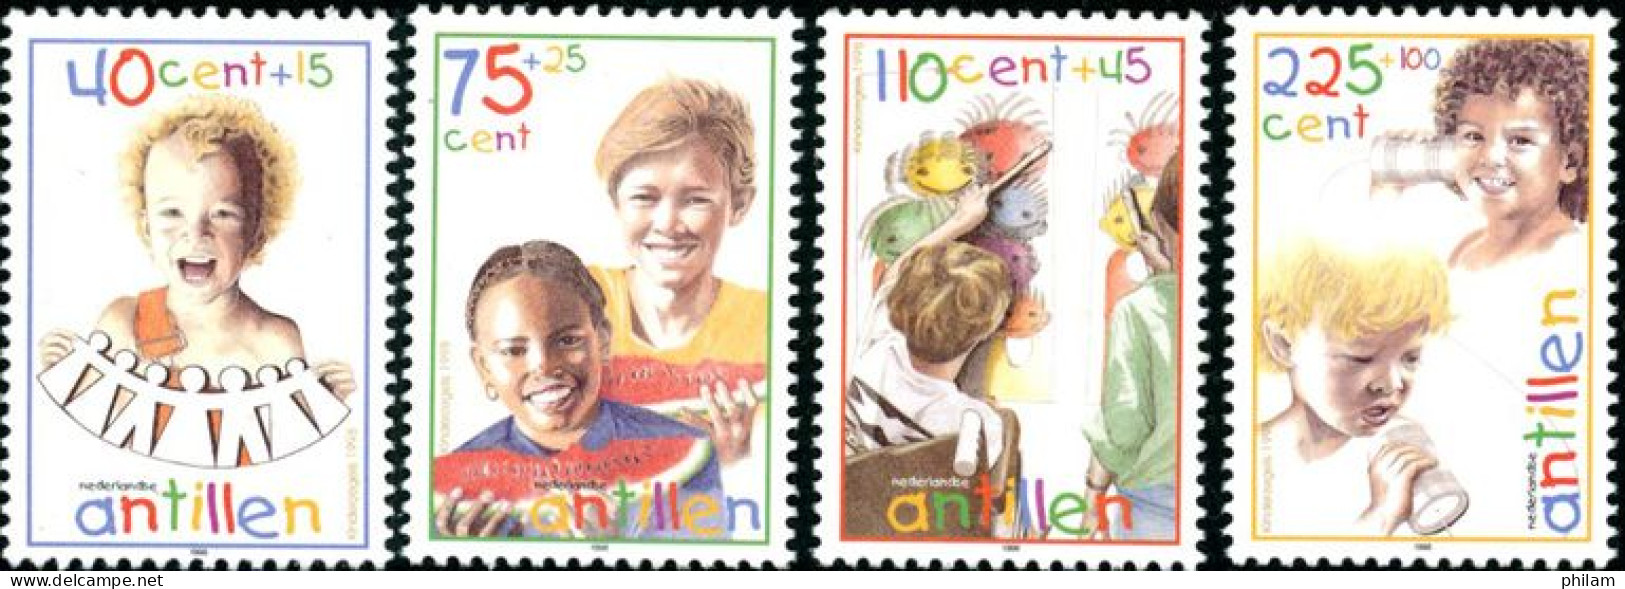 ANTILLES NEERLANDAISES 1998 - Droits De L'enfant - 4 V. - Niederländische Antillen, Curaçao, Aruba